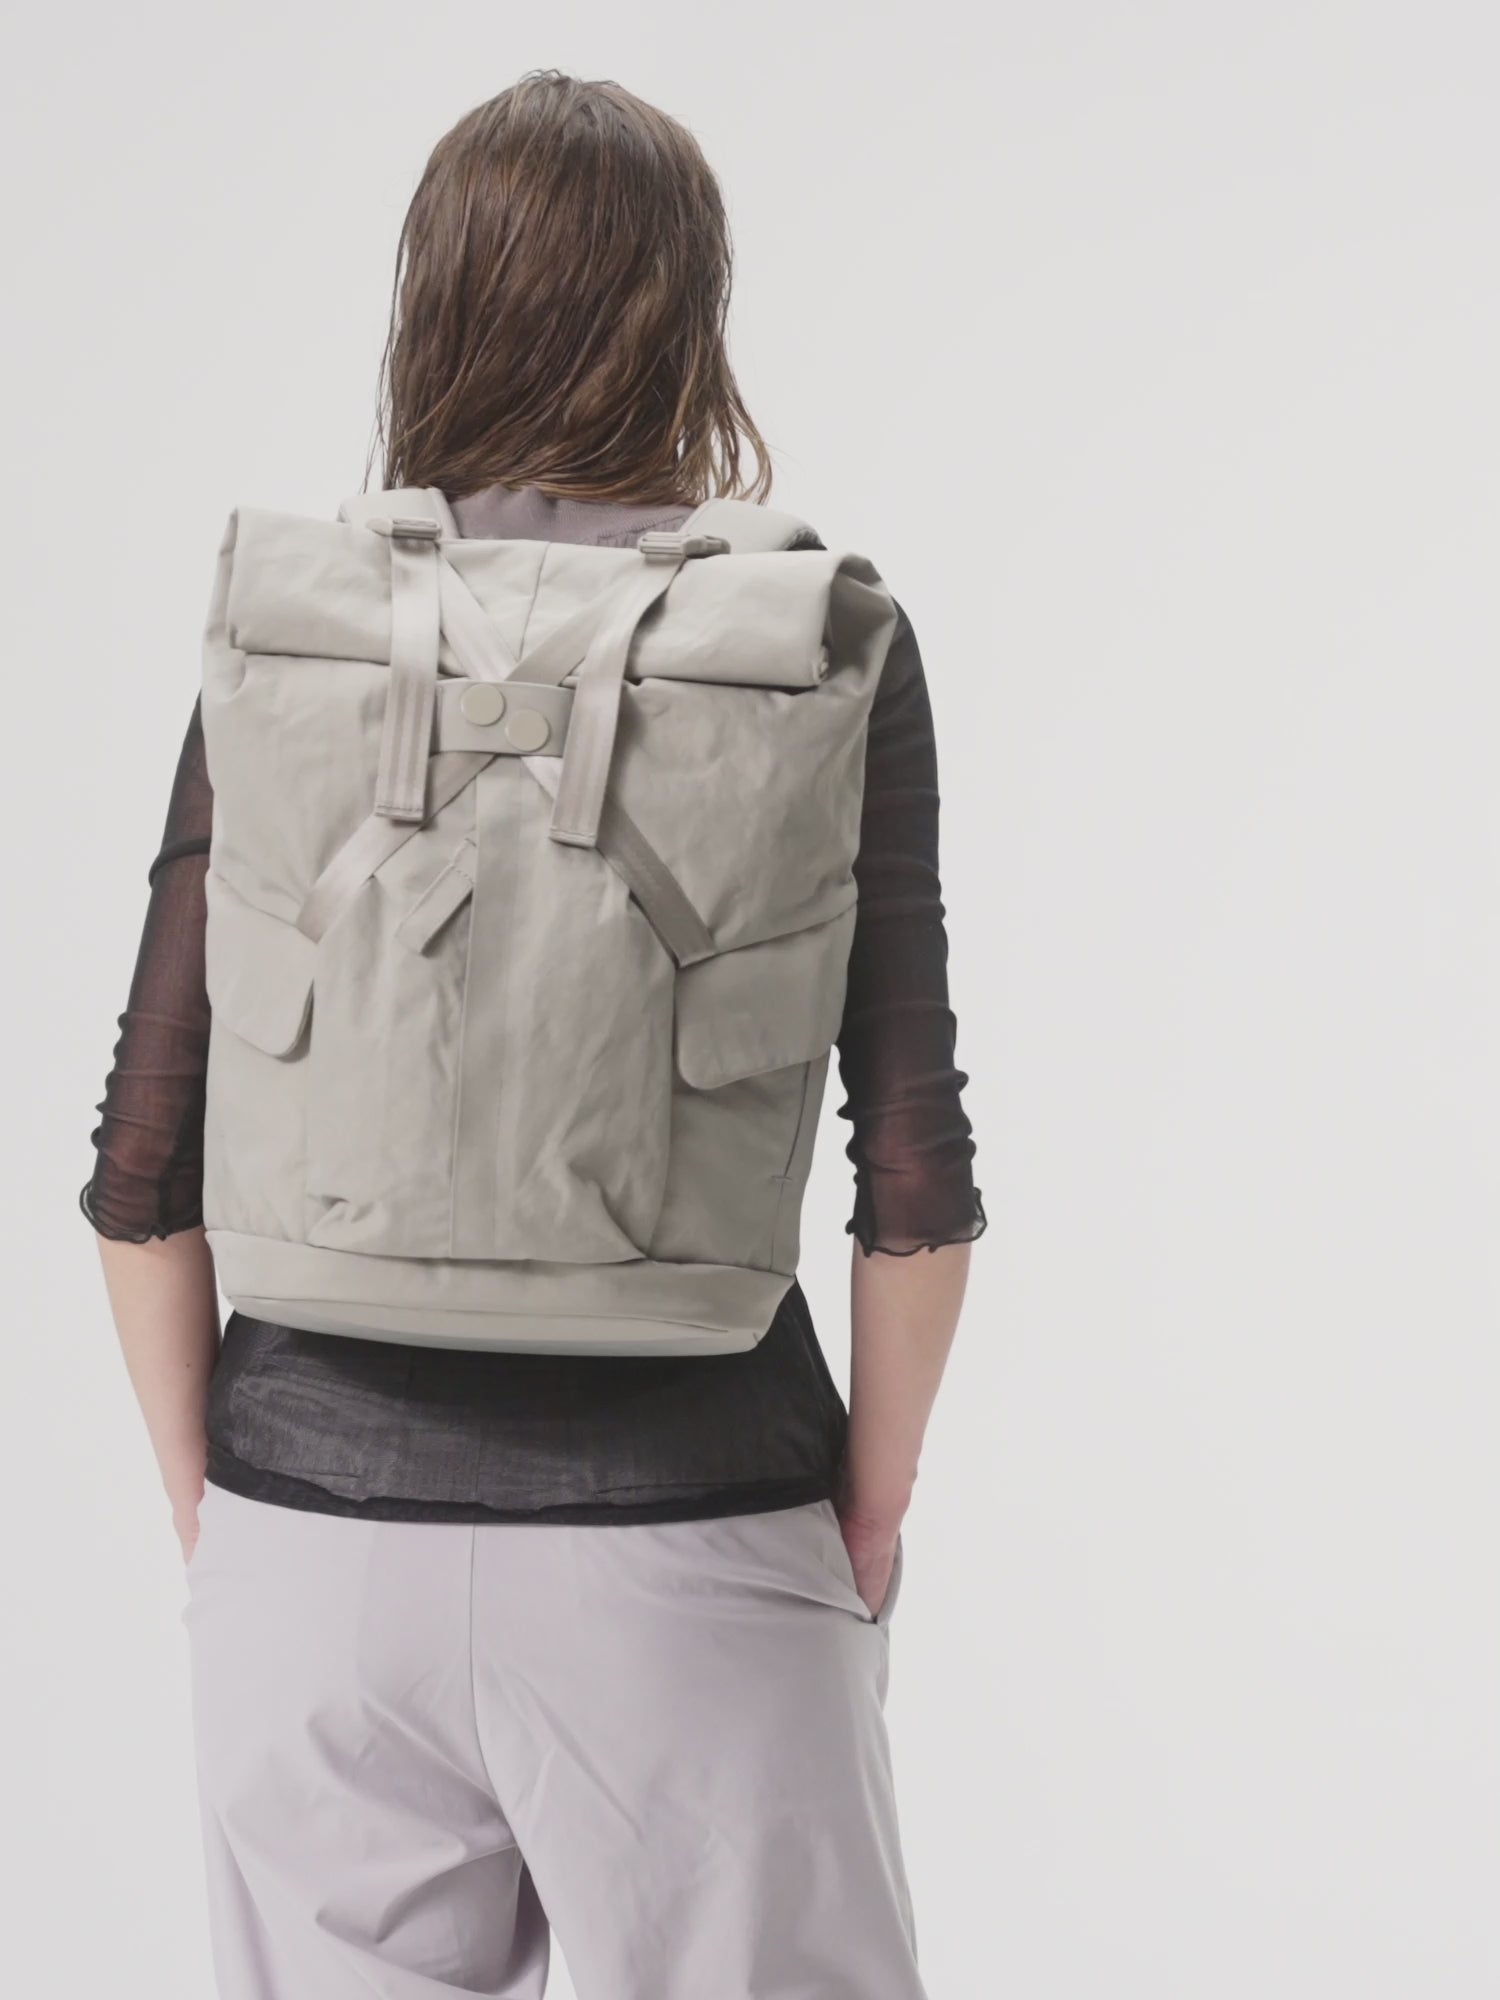 pinqponq-backpack-Kross-Crinkle-Taupe-model-video